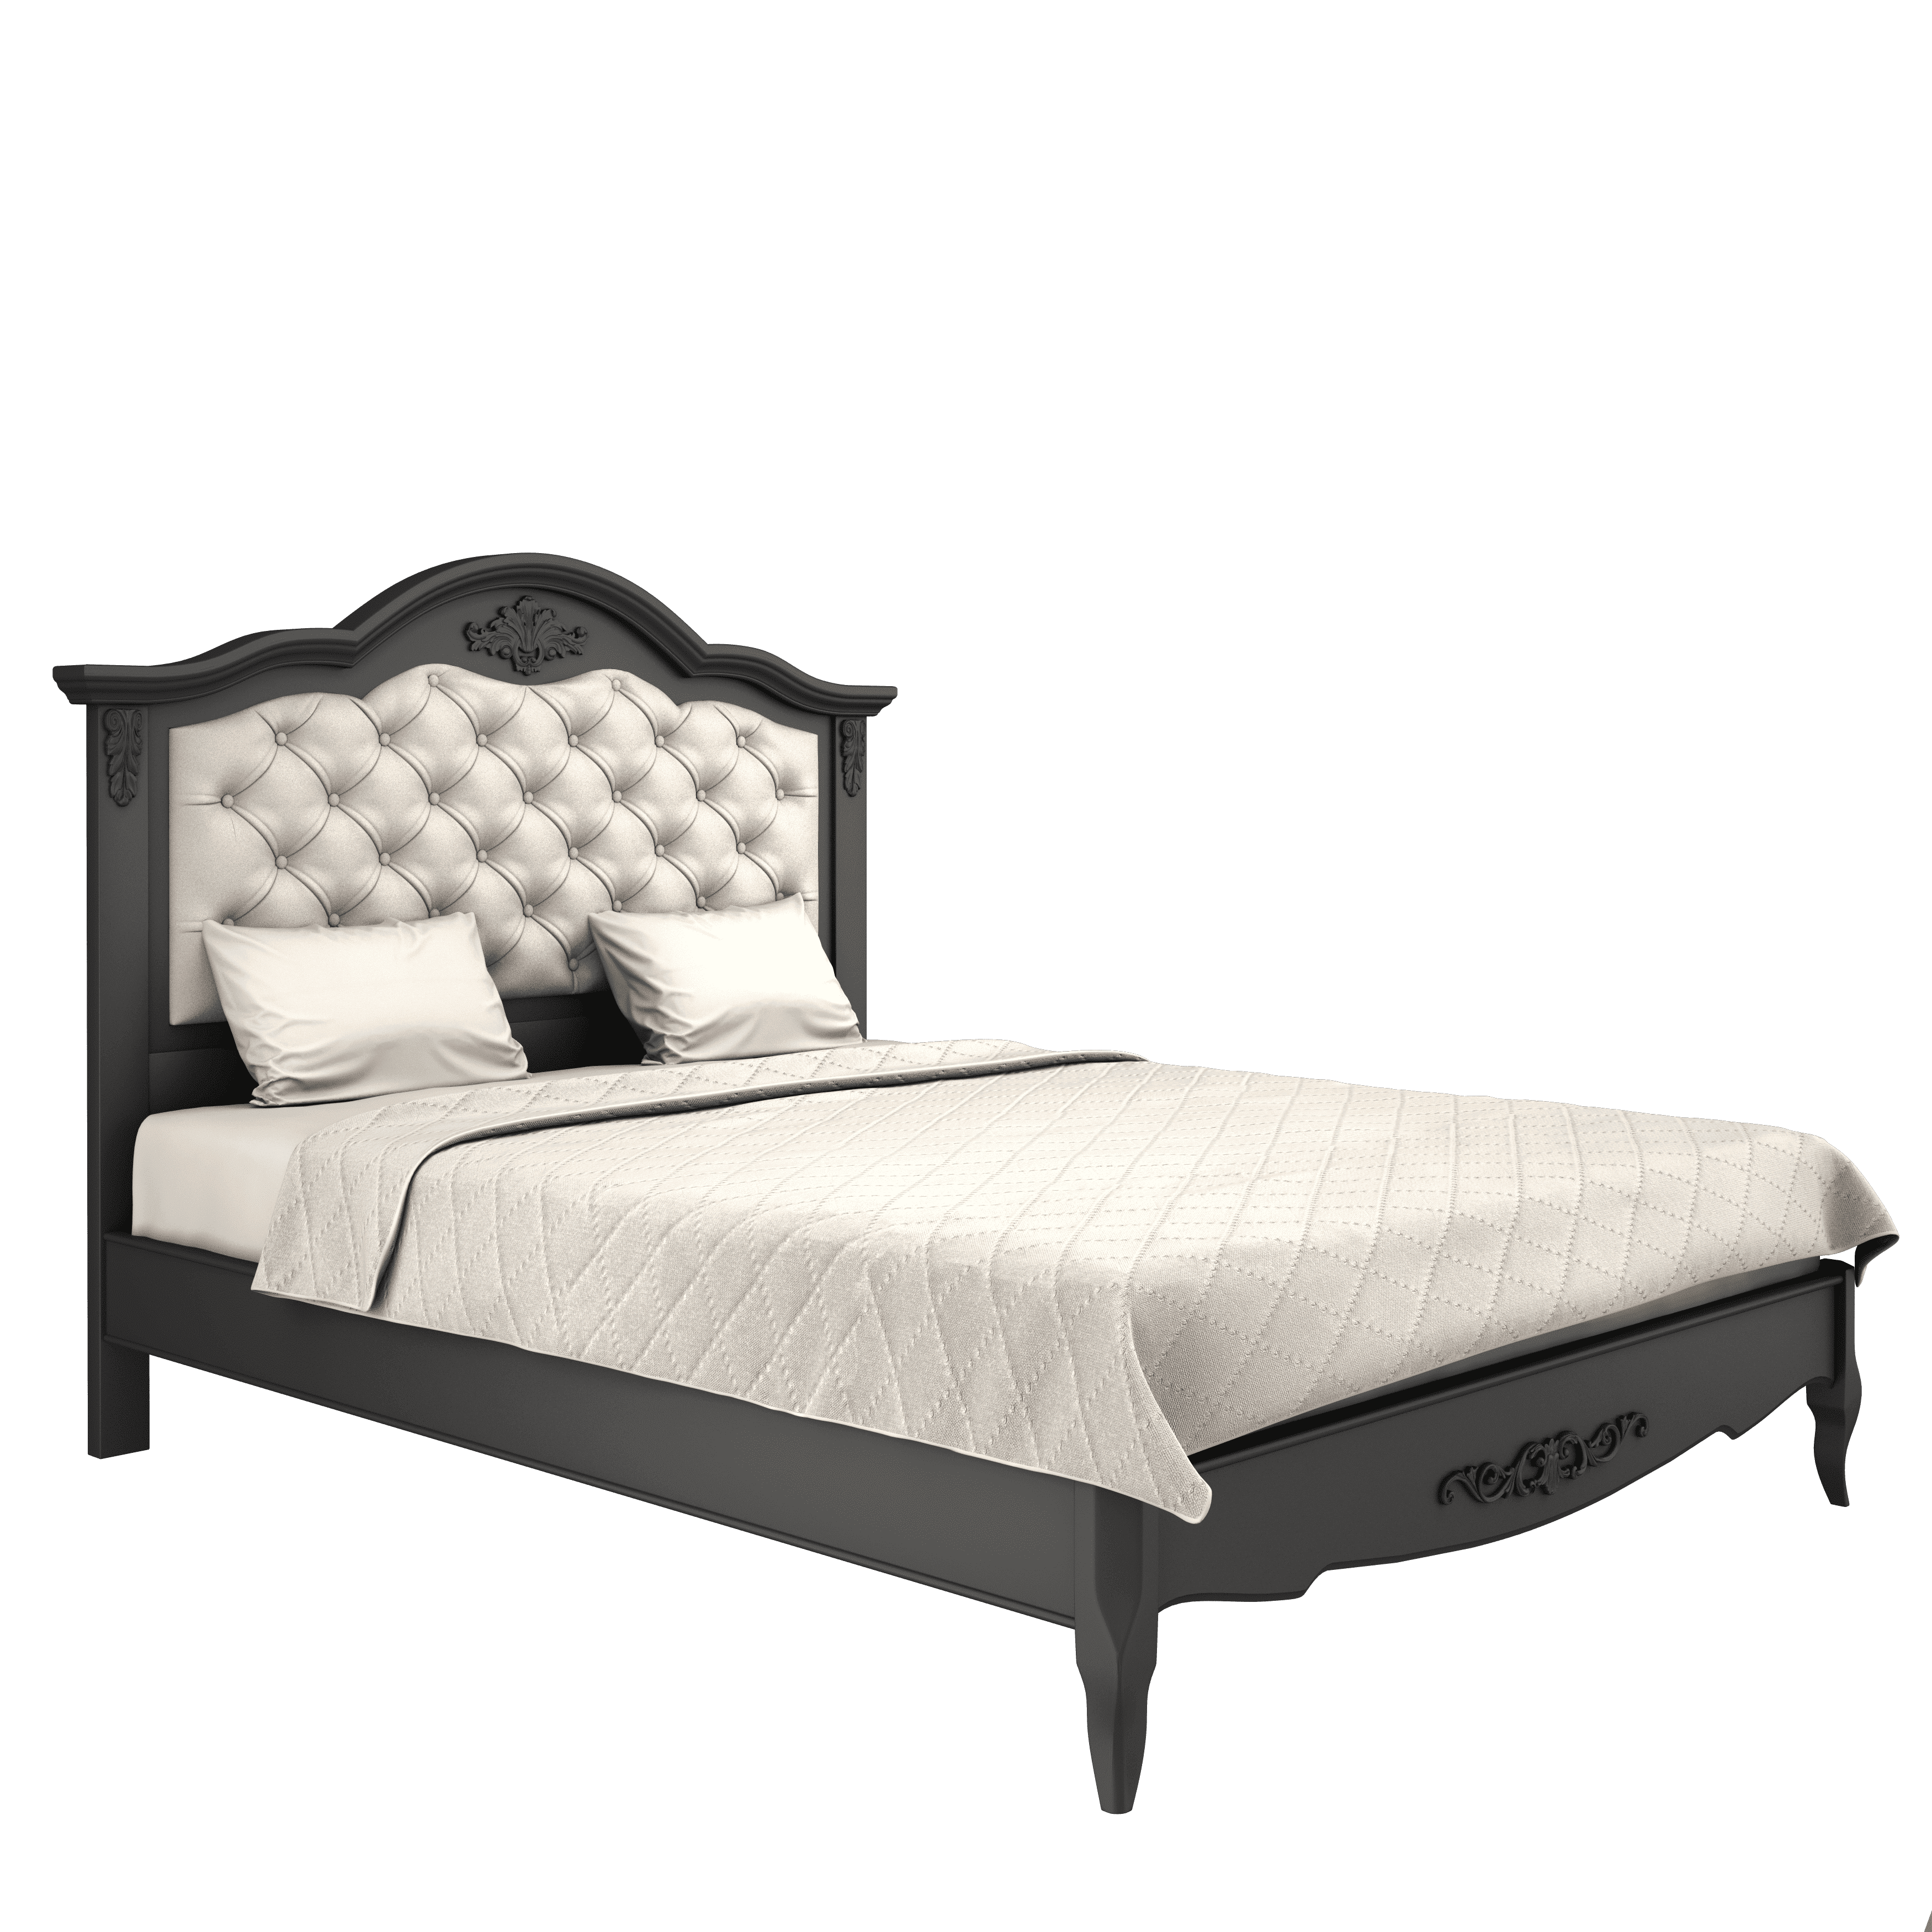 Кровать Aletan Provence, двуспальная, 160x200 см, цвет: черный, размер 179х211х145 см (B216BL)B216BL